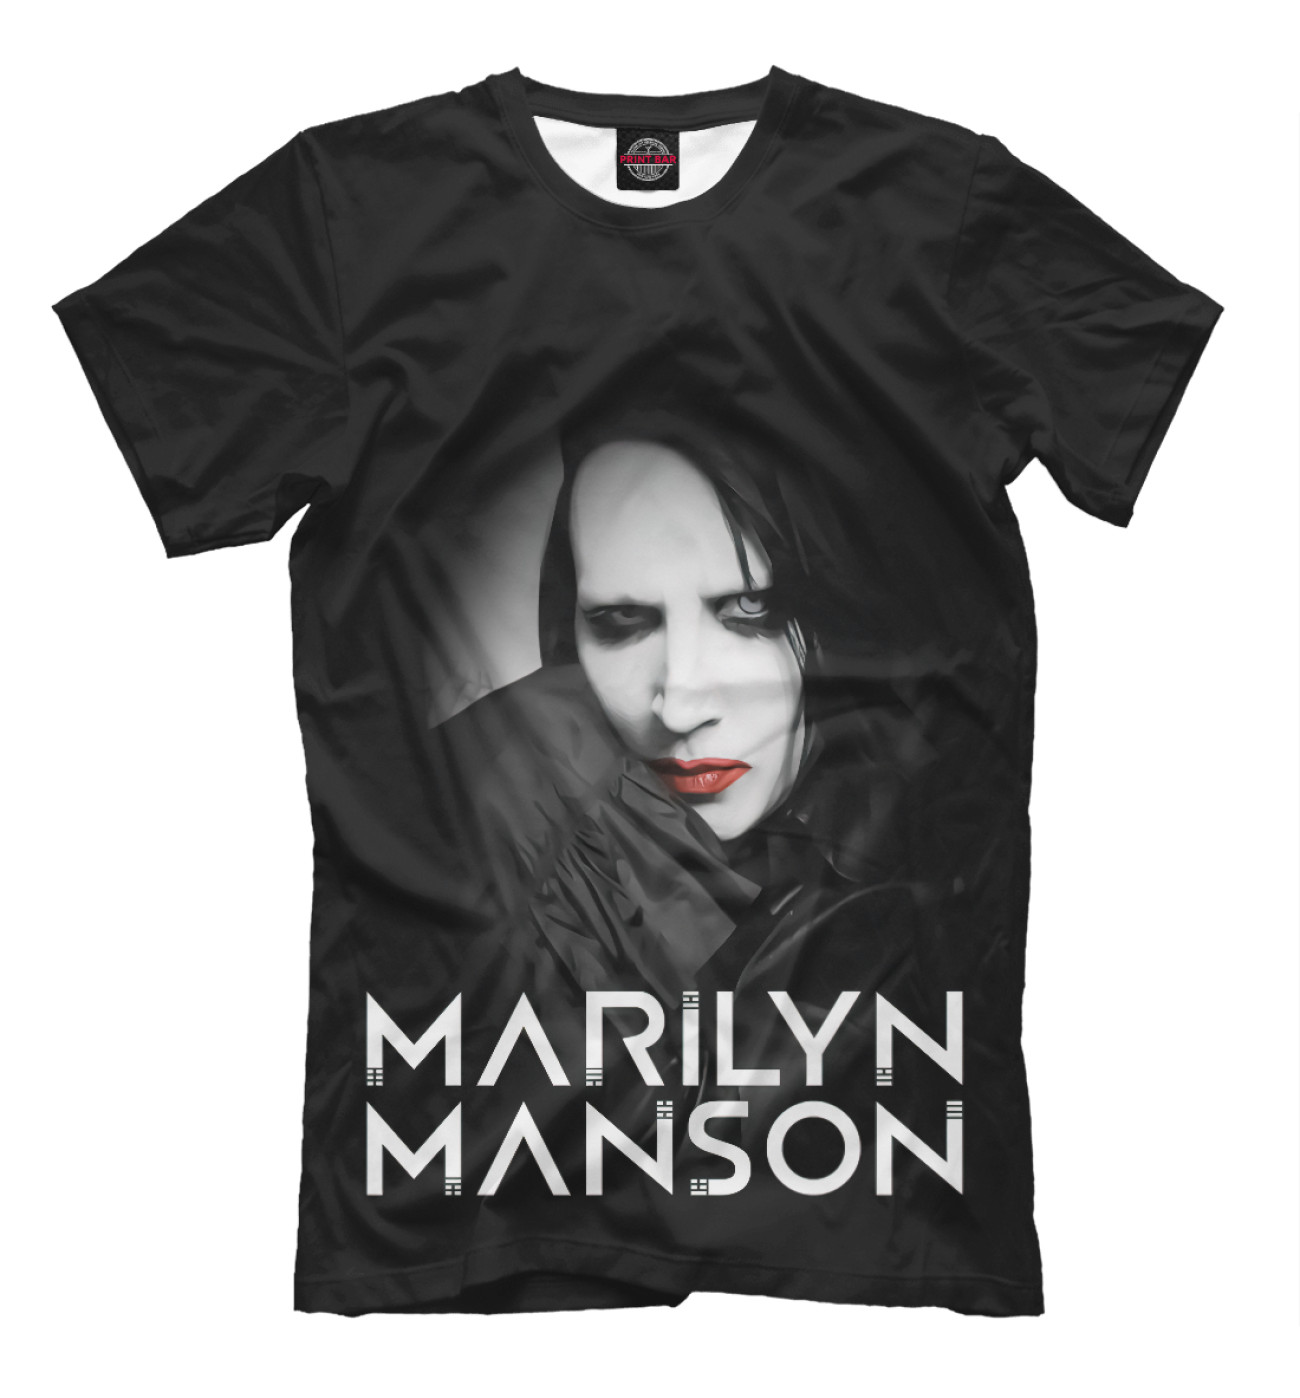 Мужская Футболка Marilyn Manson, артикул: MRM-485917-fut-2